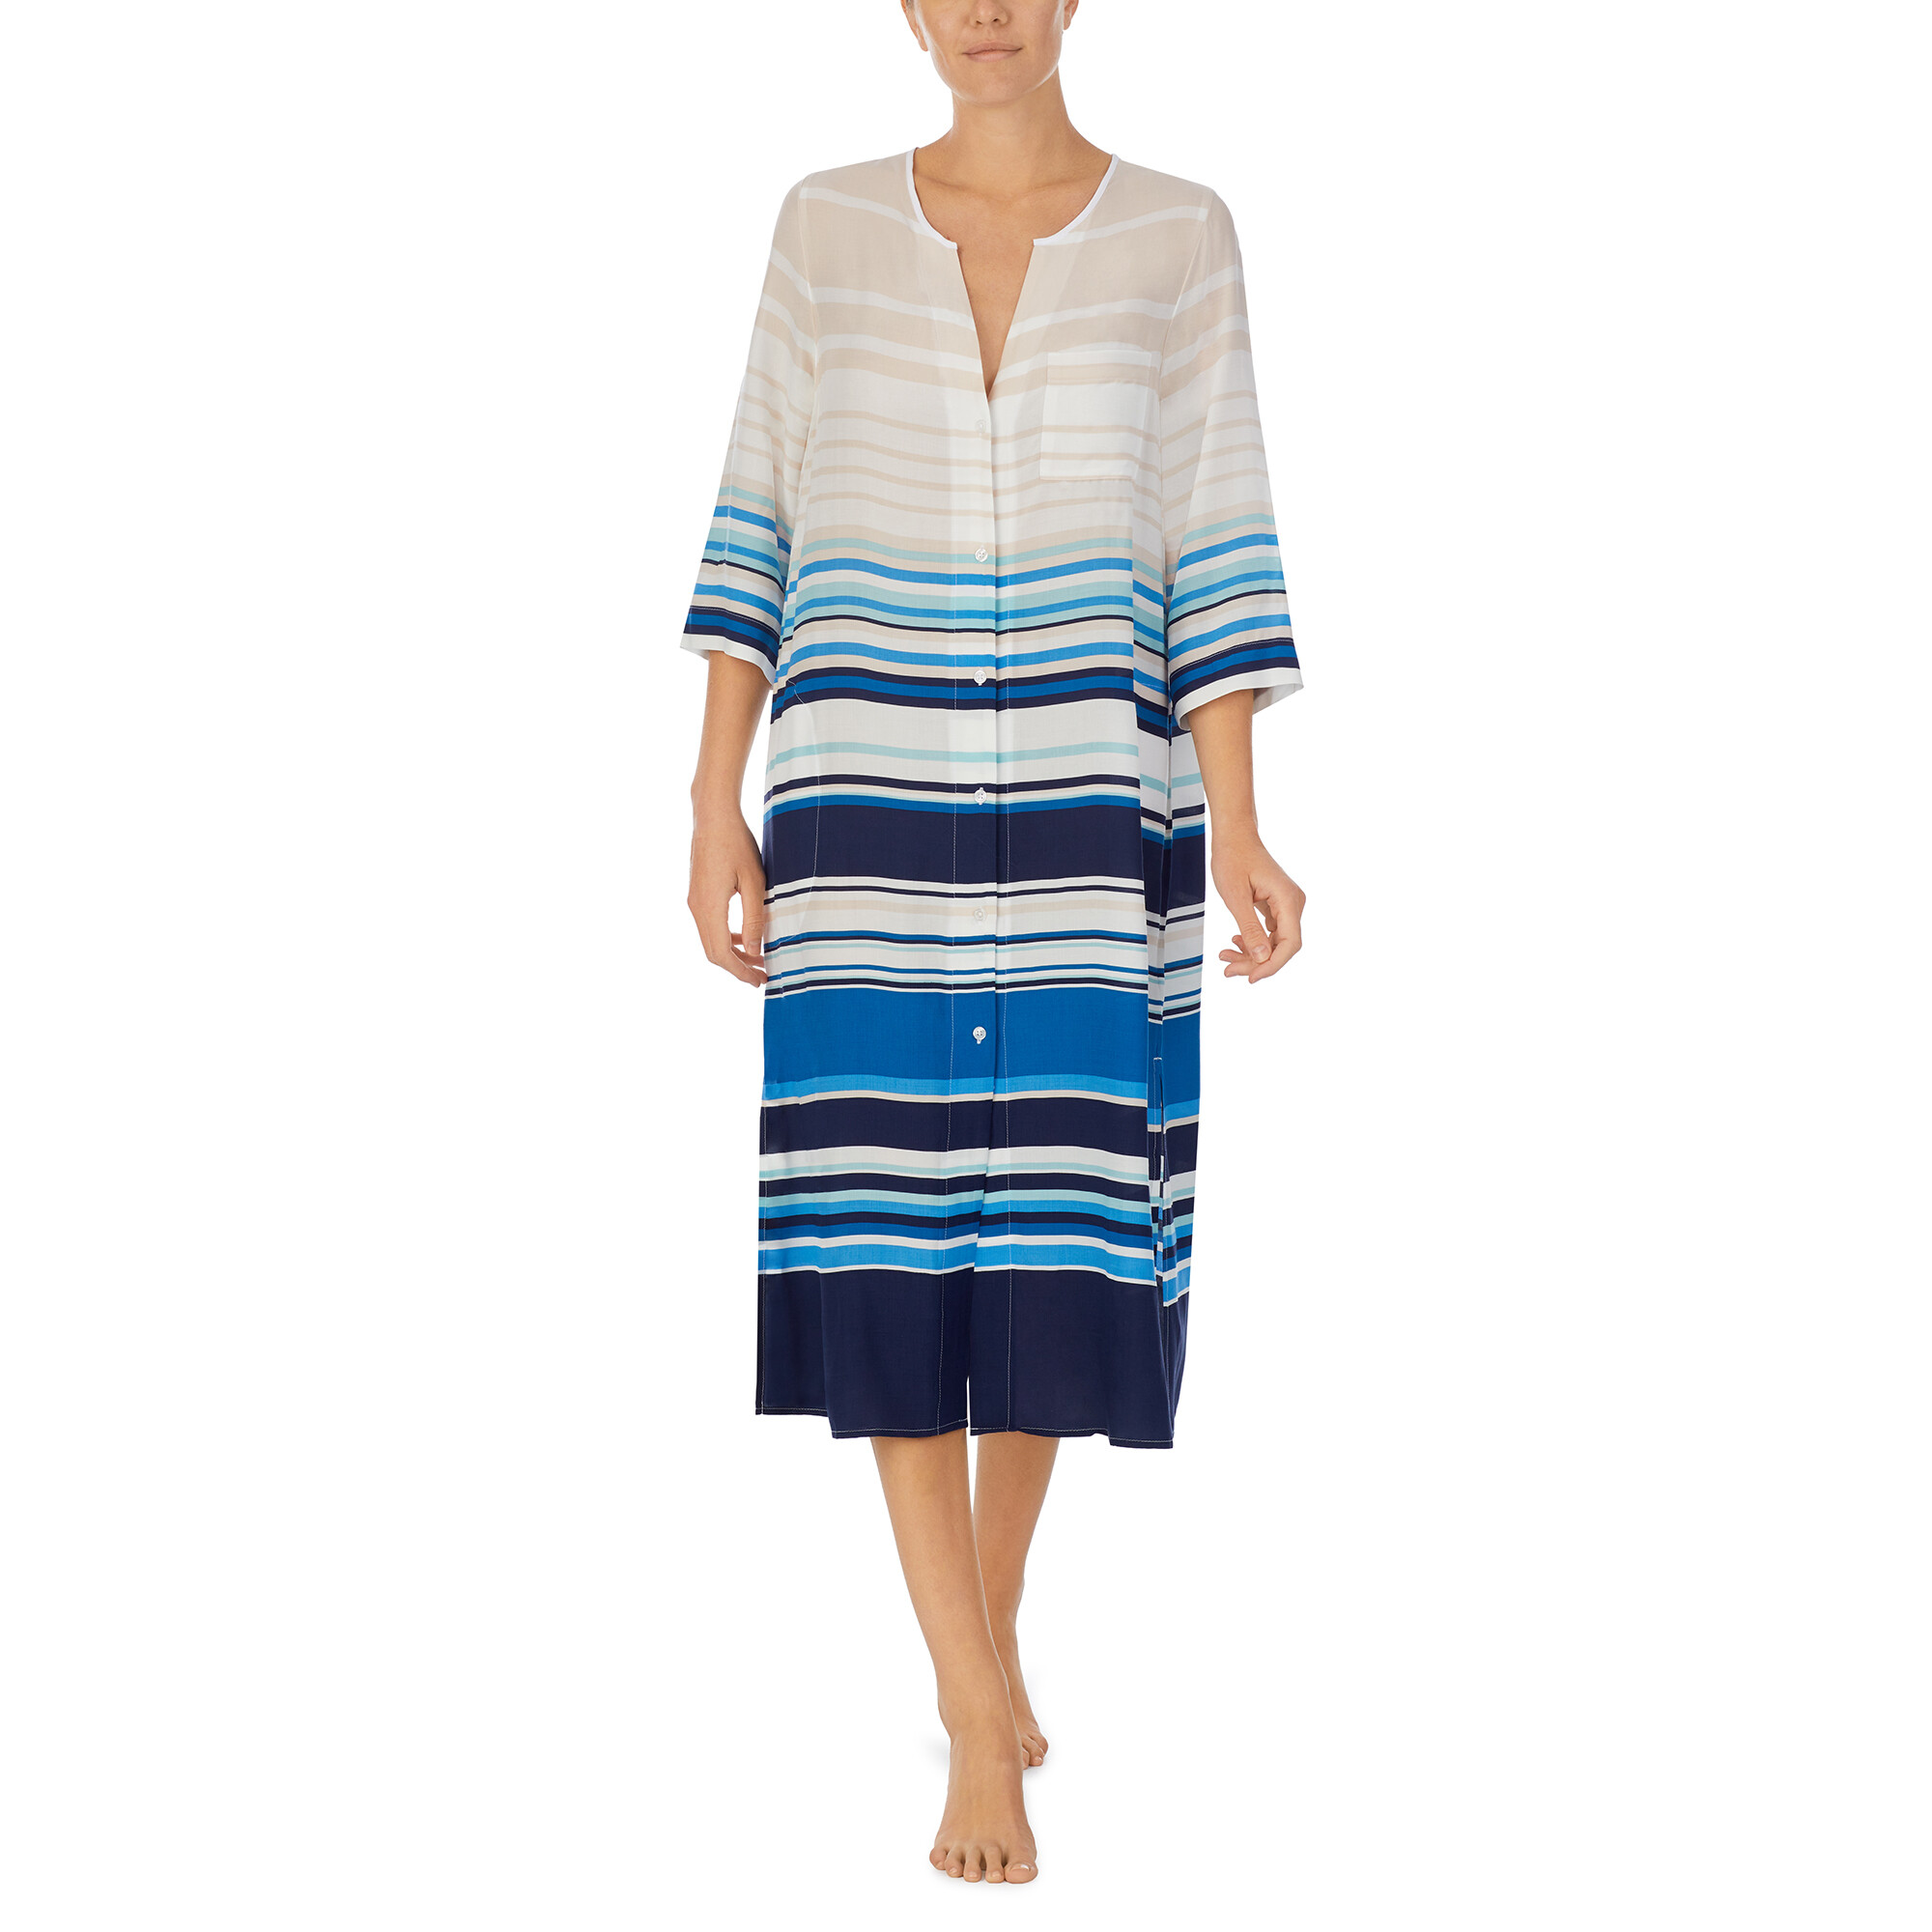 Imbracaminte Femei Donna Karan 34 Sleeve Maxi Sleepshirt Ink Stripe